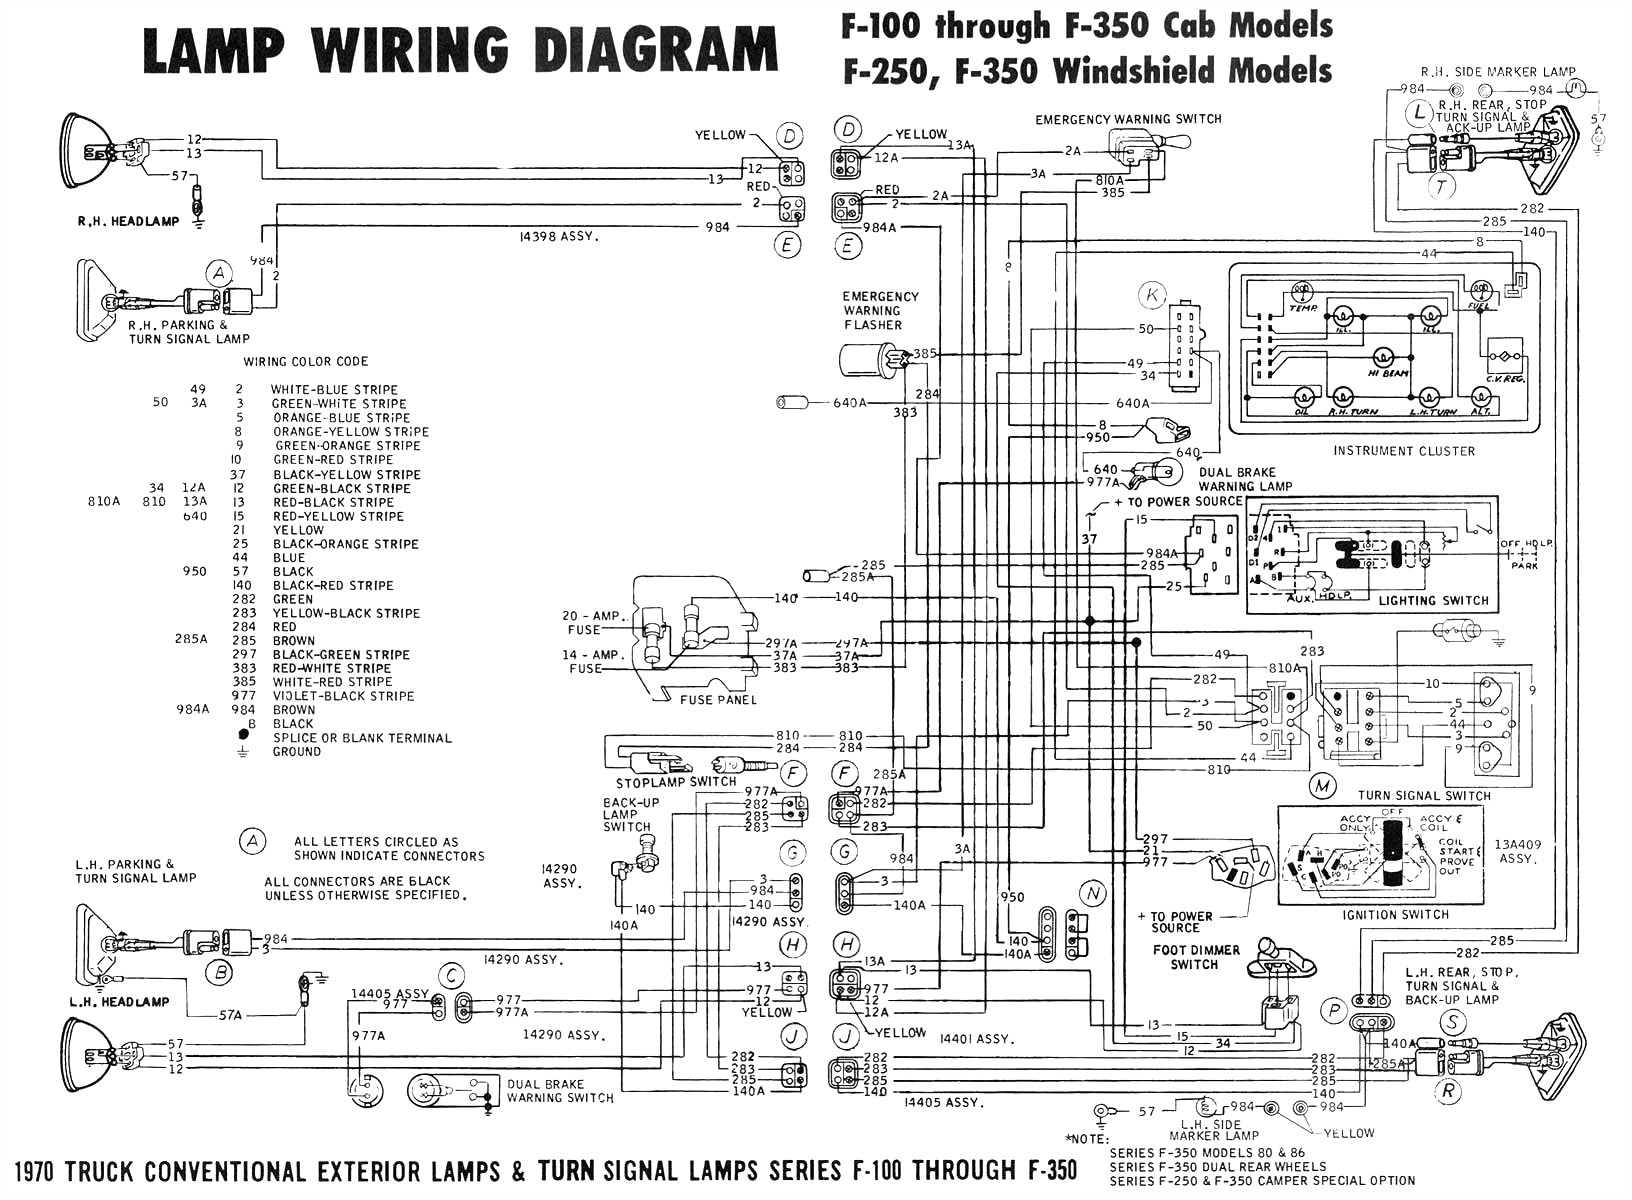 agm headlight switch wiring use wiring diagram agm headlight switch wiring